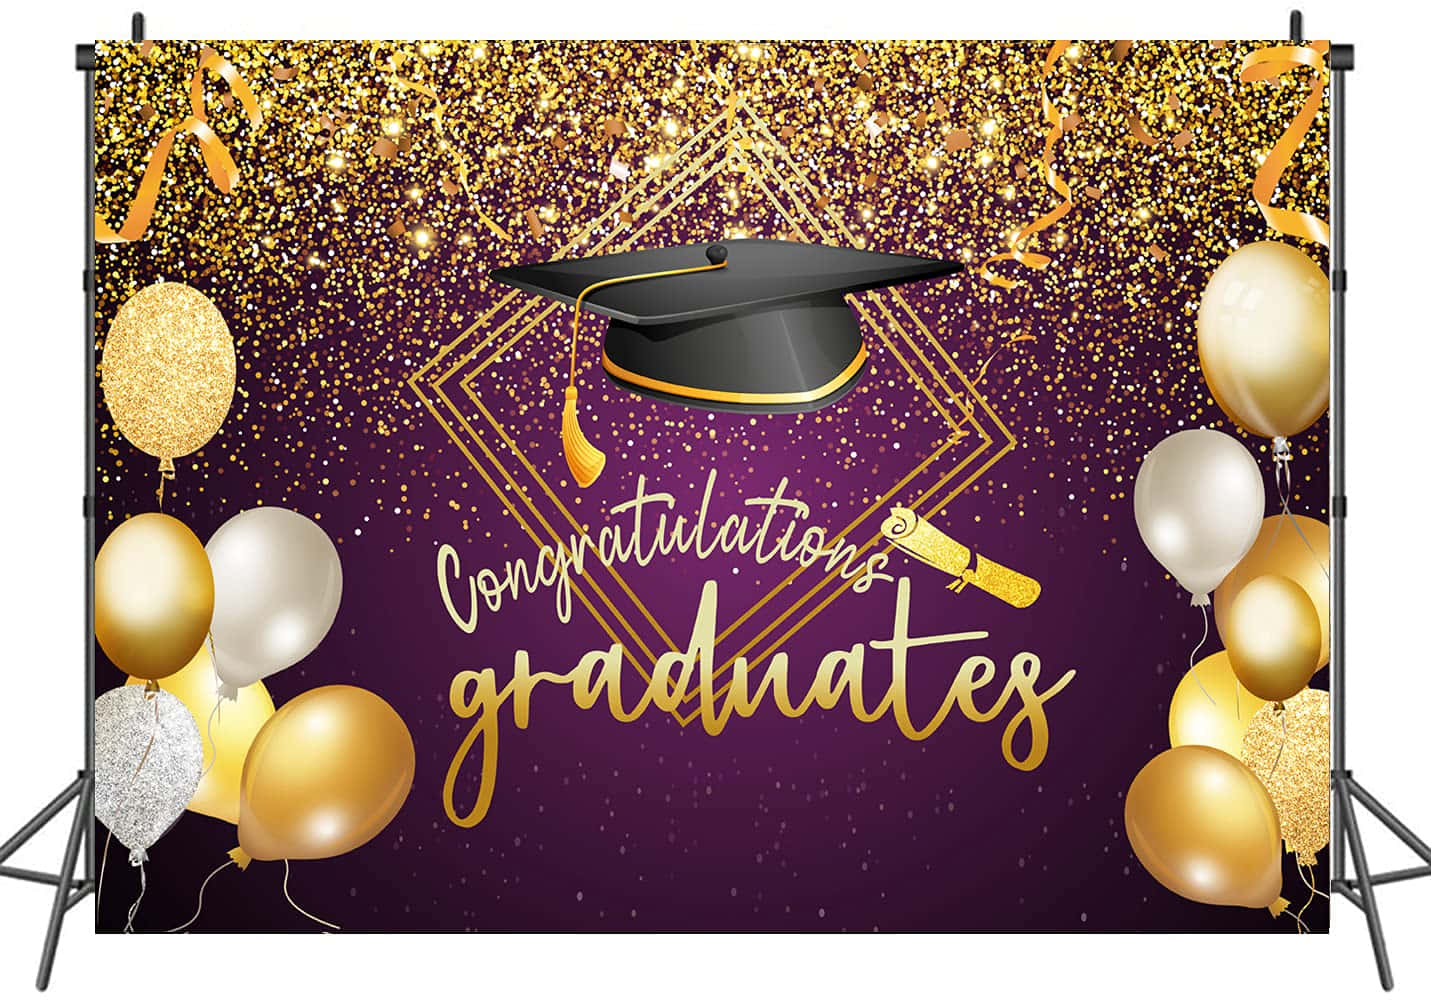 Congratulations Graduates Gold Poster Picture